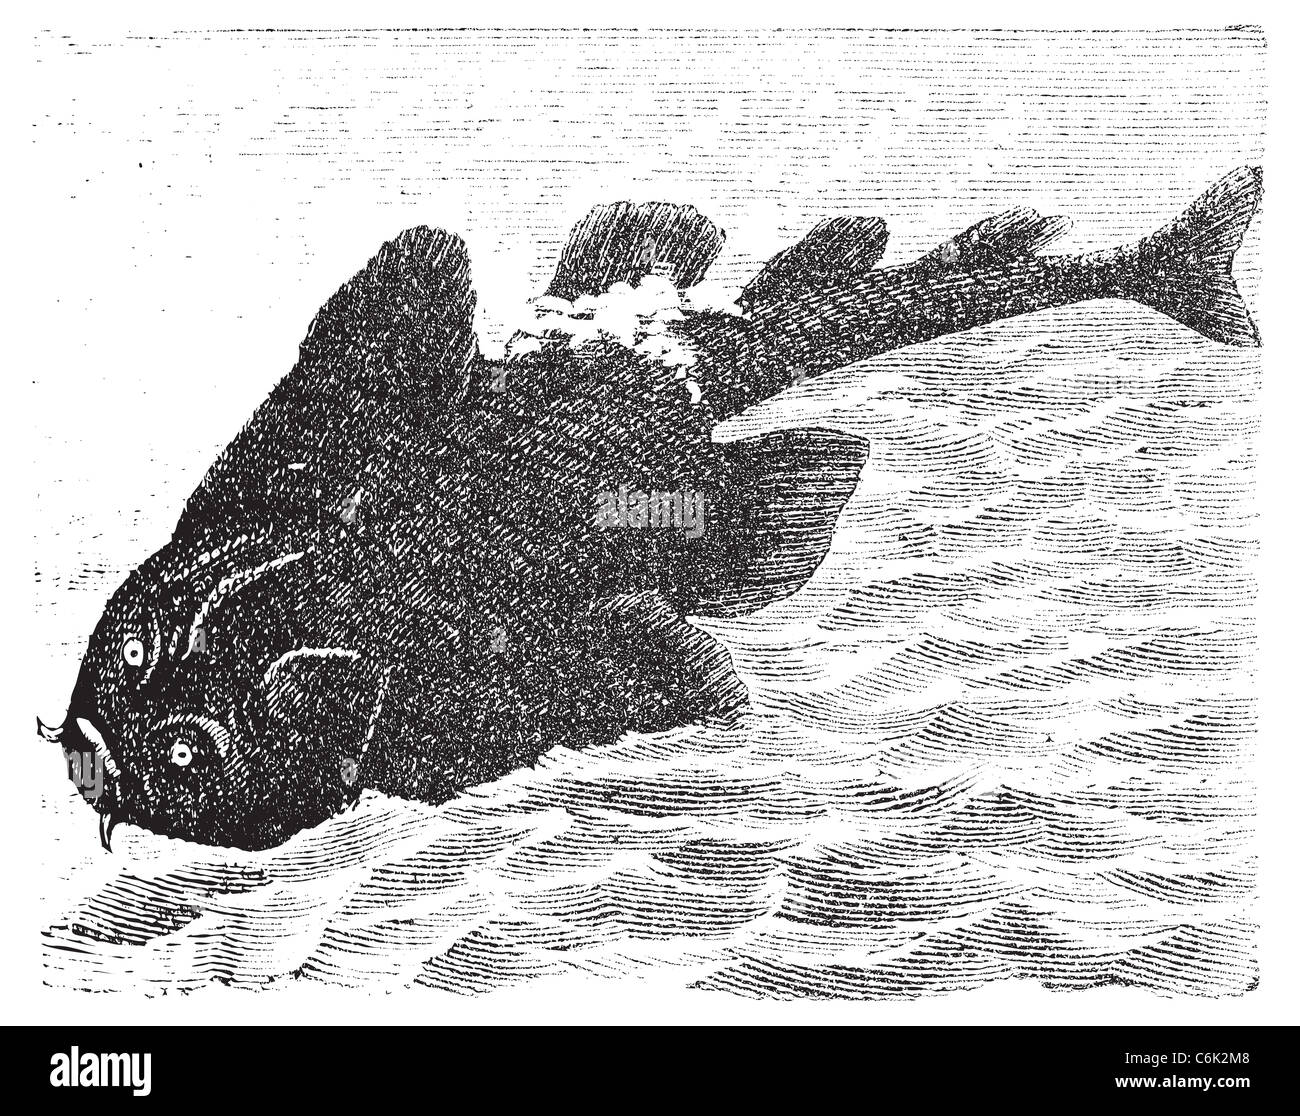 Squatina angelus or Angel shark old engraving. Angelshark engraved illustration Stock Photo